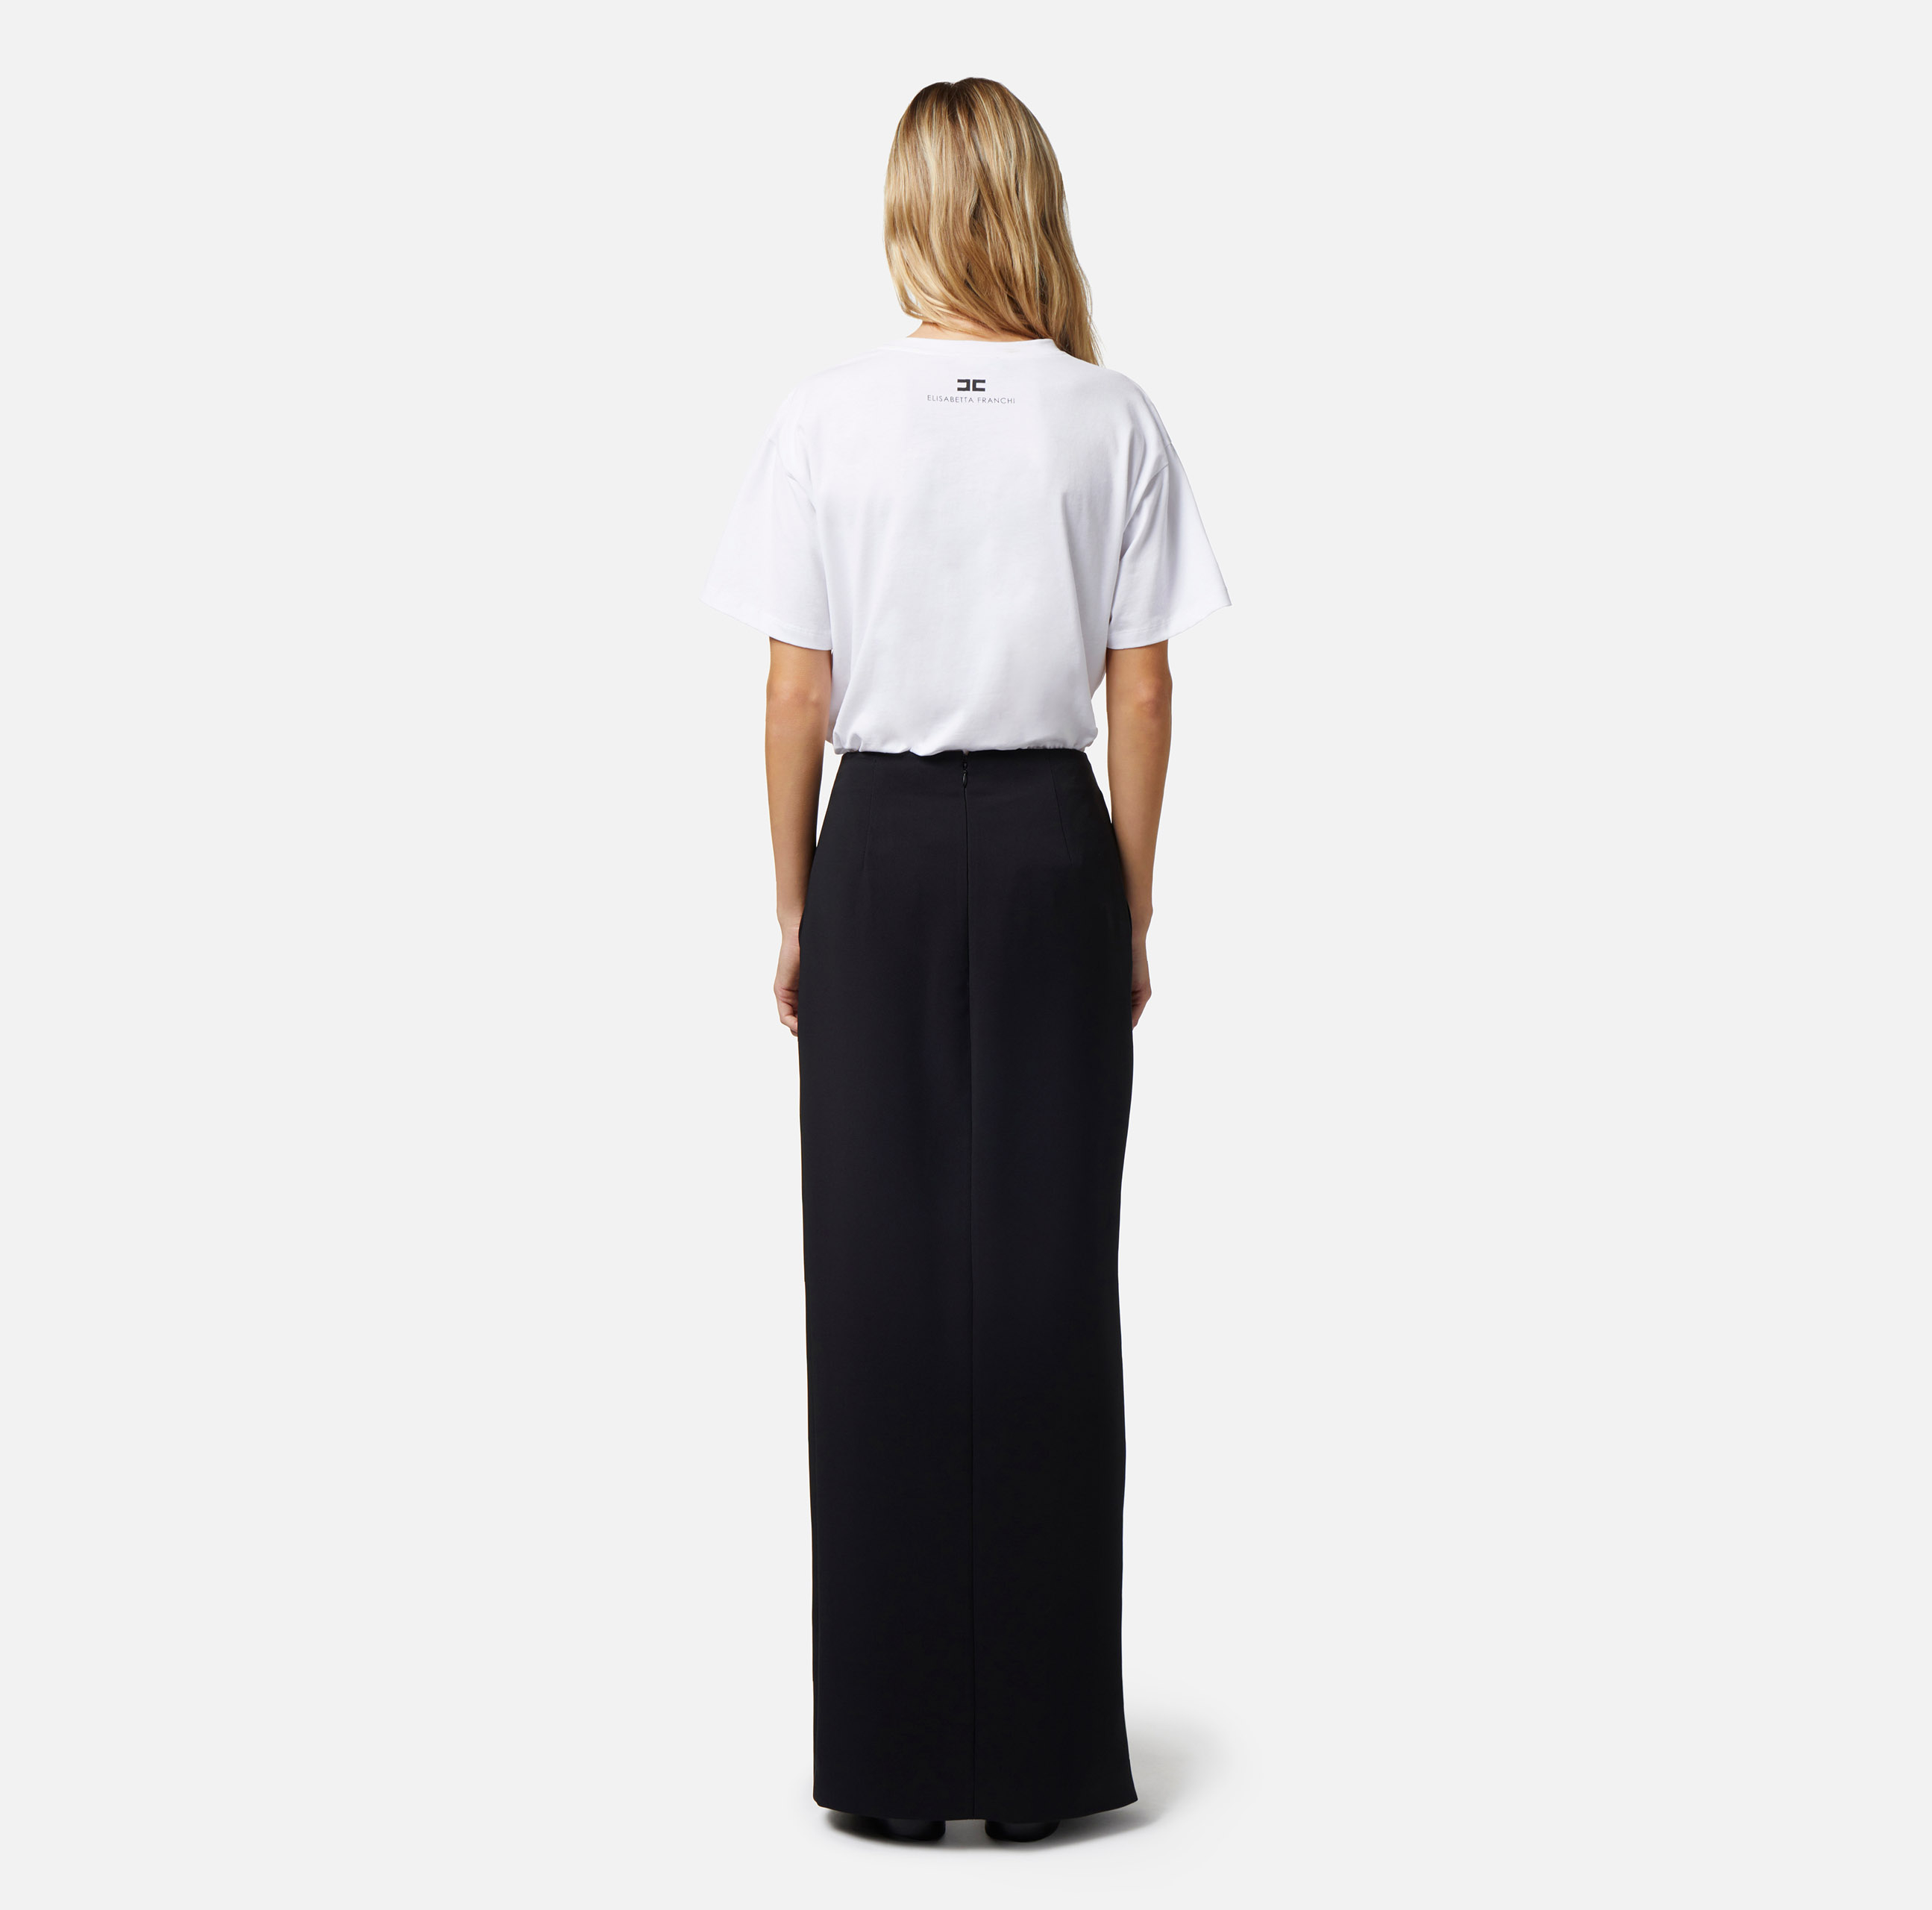 Long skirt in lightweight crêpe fabric with side slit - Elisabetta Franchi